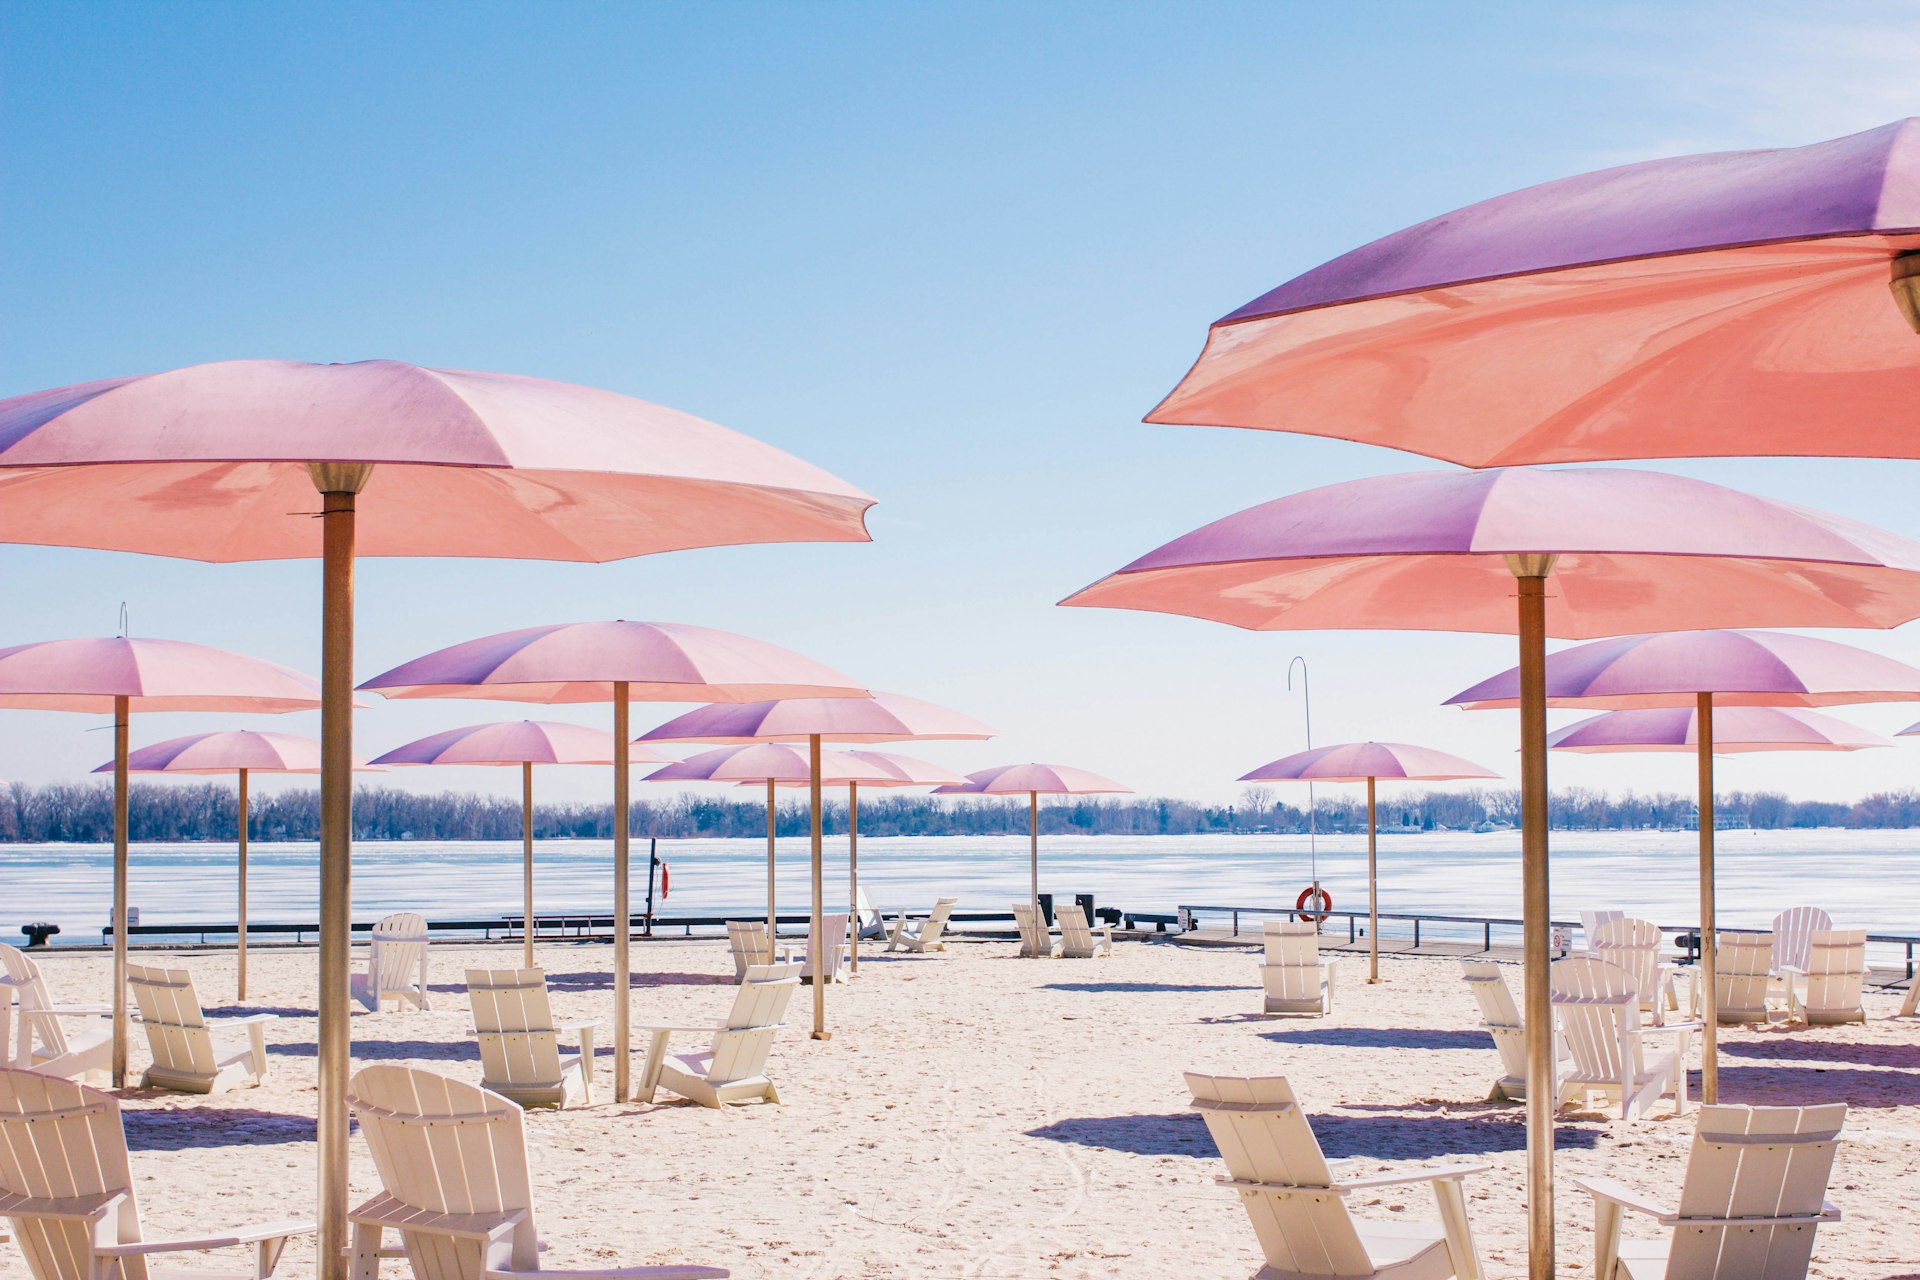 Beach umbrellas on Toronto's Sugar Beach, a favorite family stop downtown